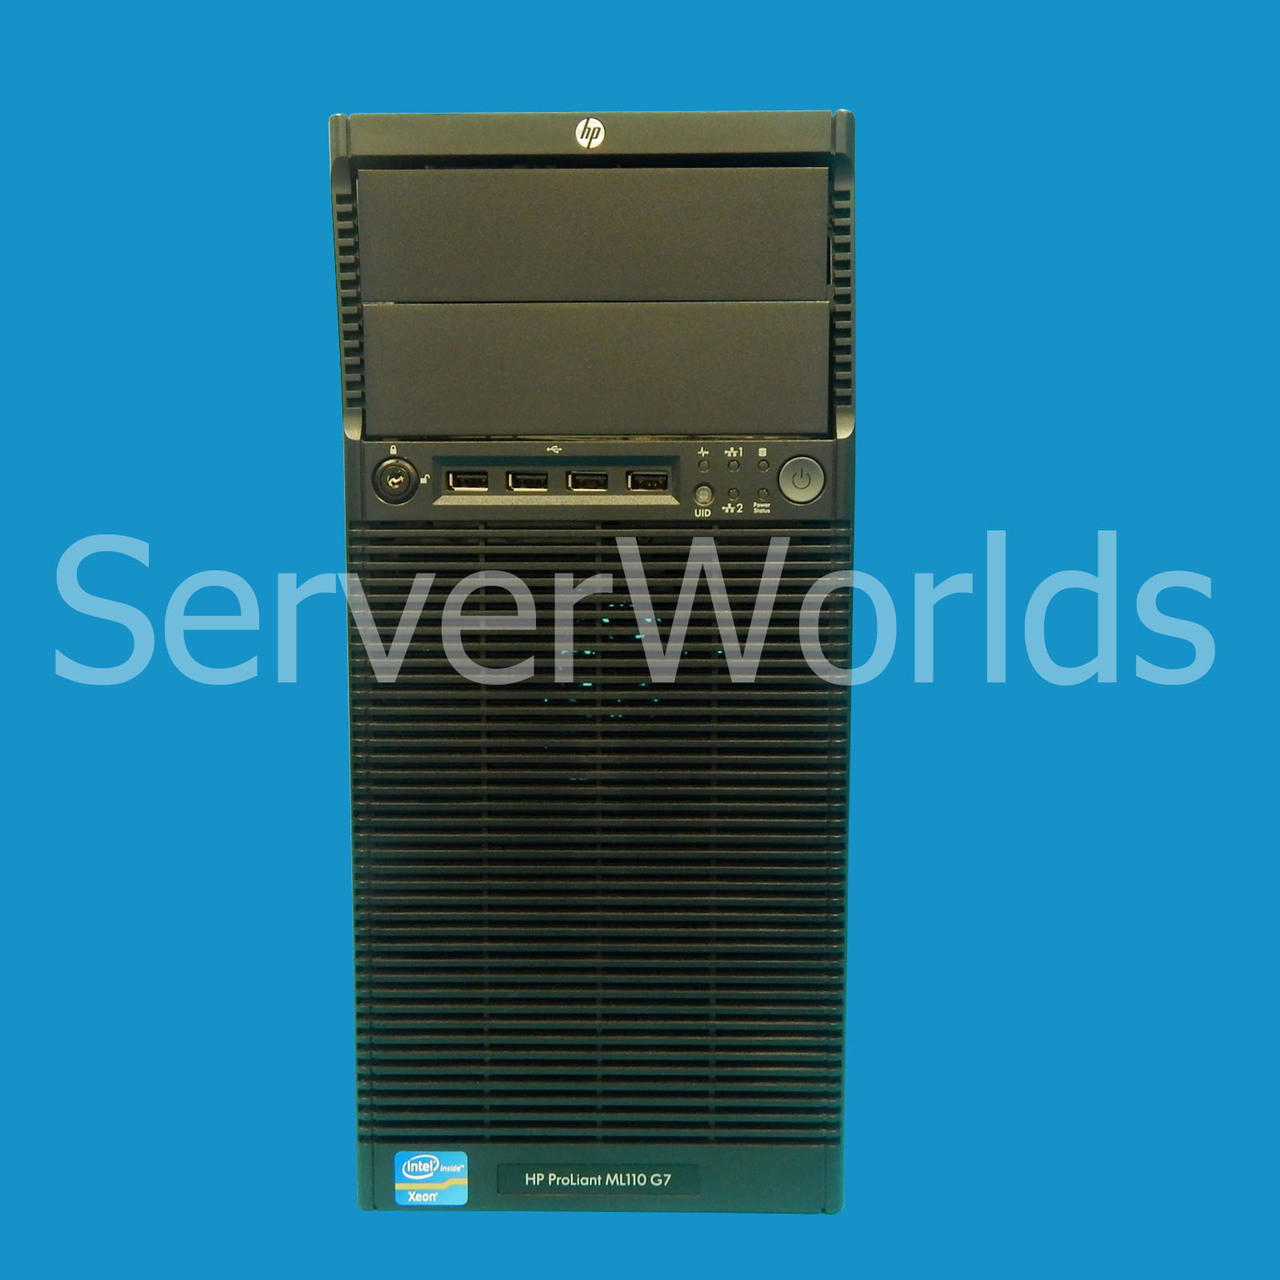 HP ML110 G7 Tower i3-2100 2GB NHP - Refurbished Server Parts 